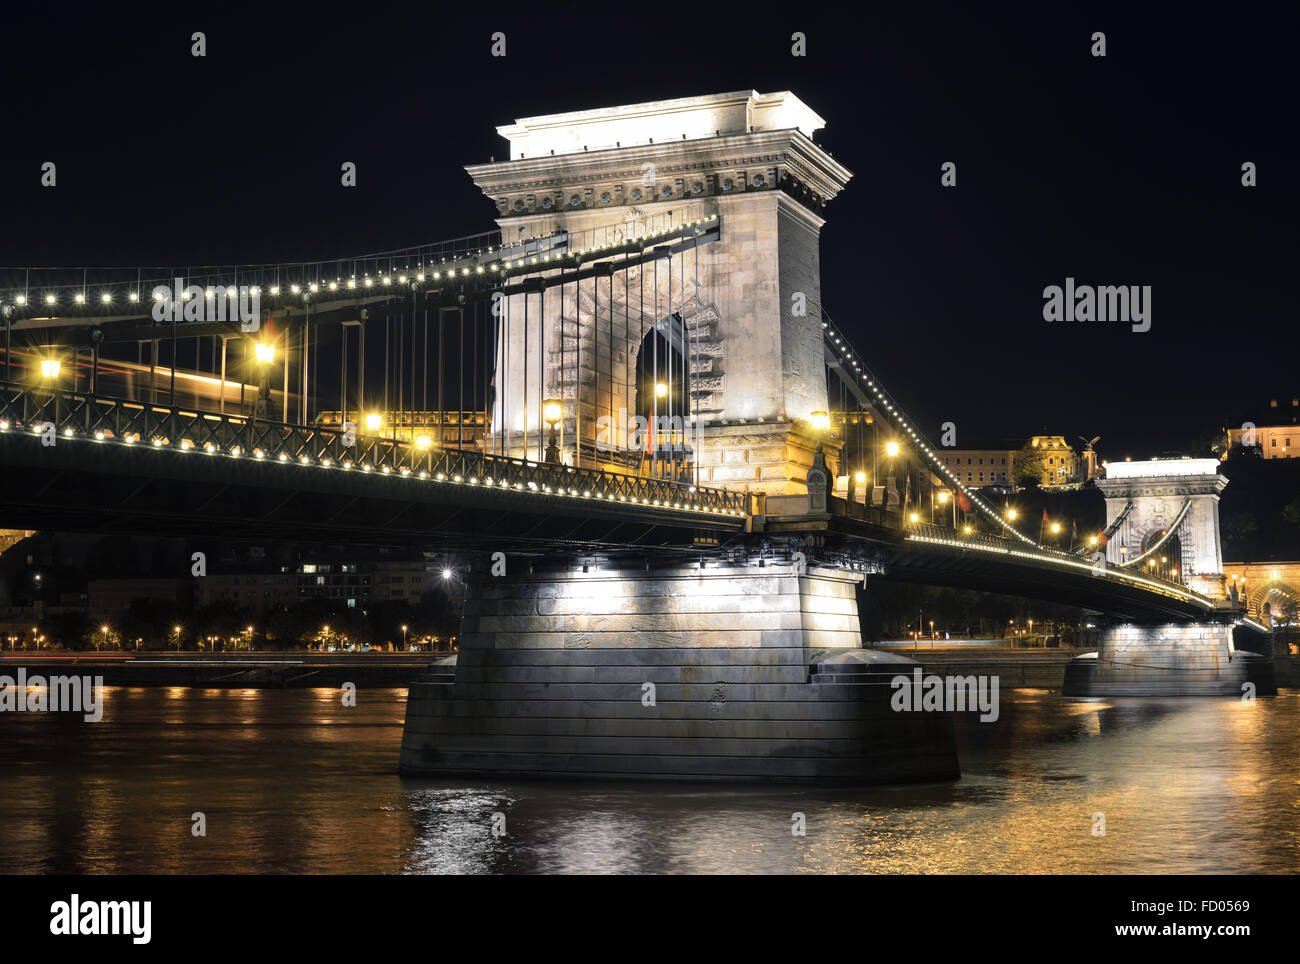 Danube river and Szechenyi Chain Bridge at night. Budapest, Hungary. Stock Photo